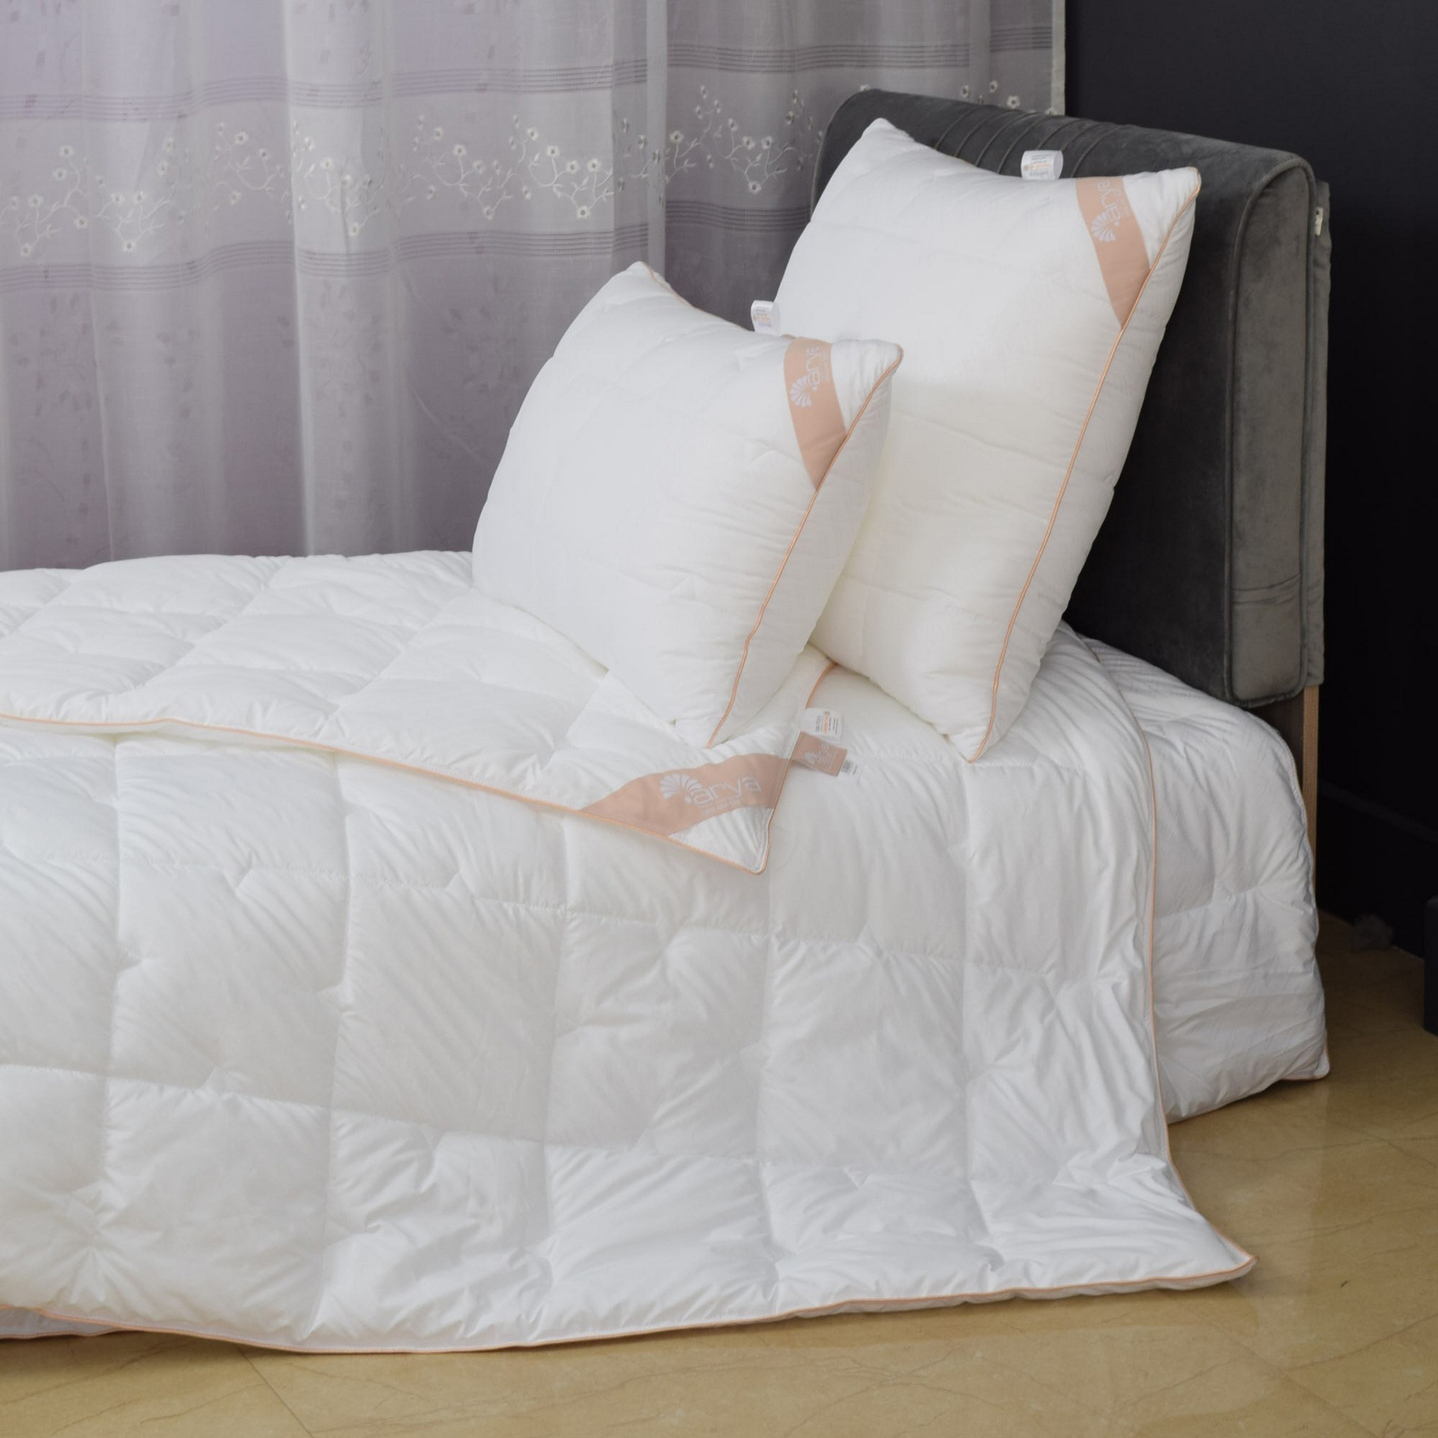 Одеяло Dream soft всесезонное цвет: белый (155х215 см), размер 155х215 см ar797139 Одеяло Dream soft всесезонное цвет: белый (155х215 см) - фото 1